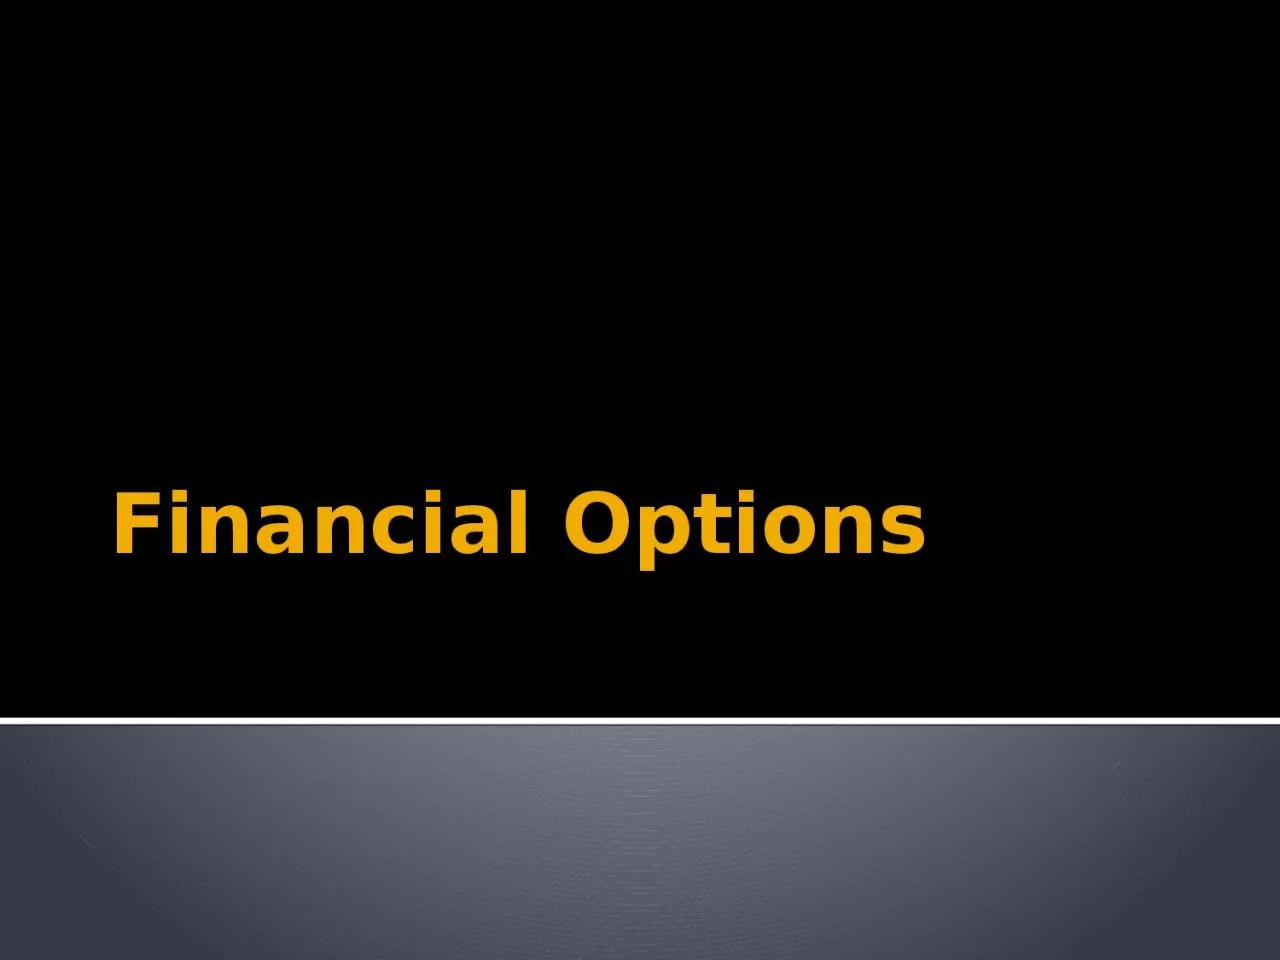 Financial Options Option